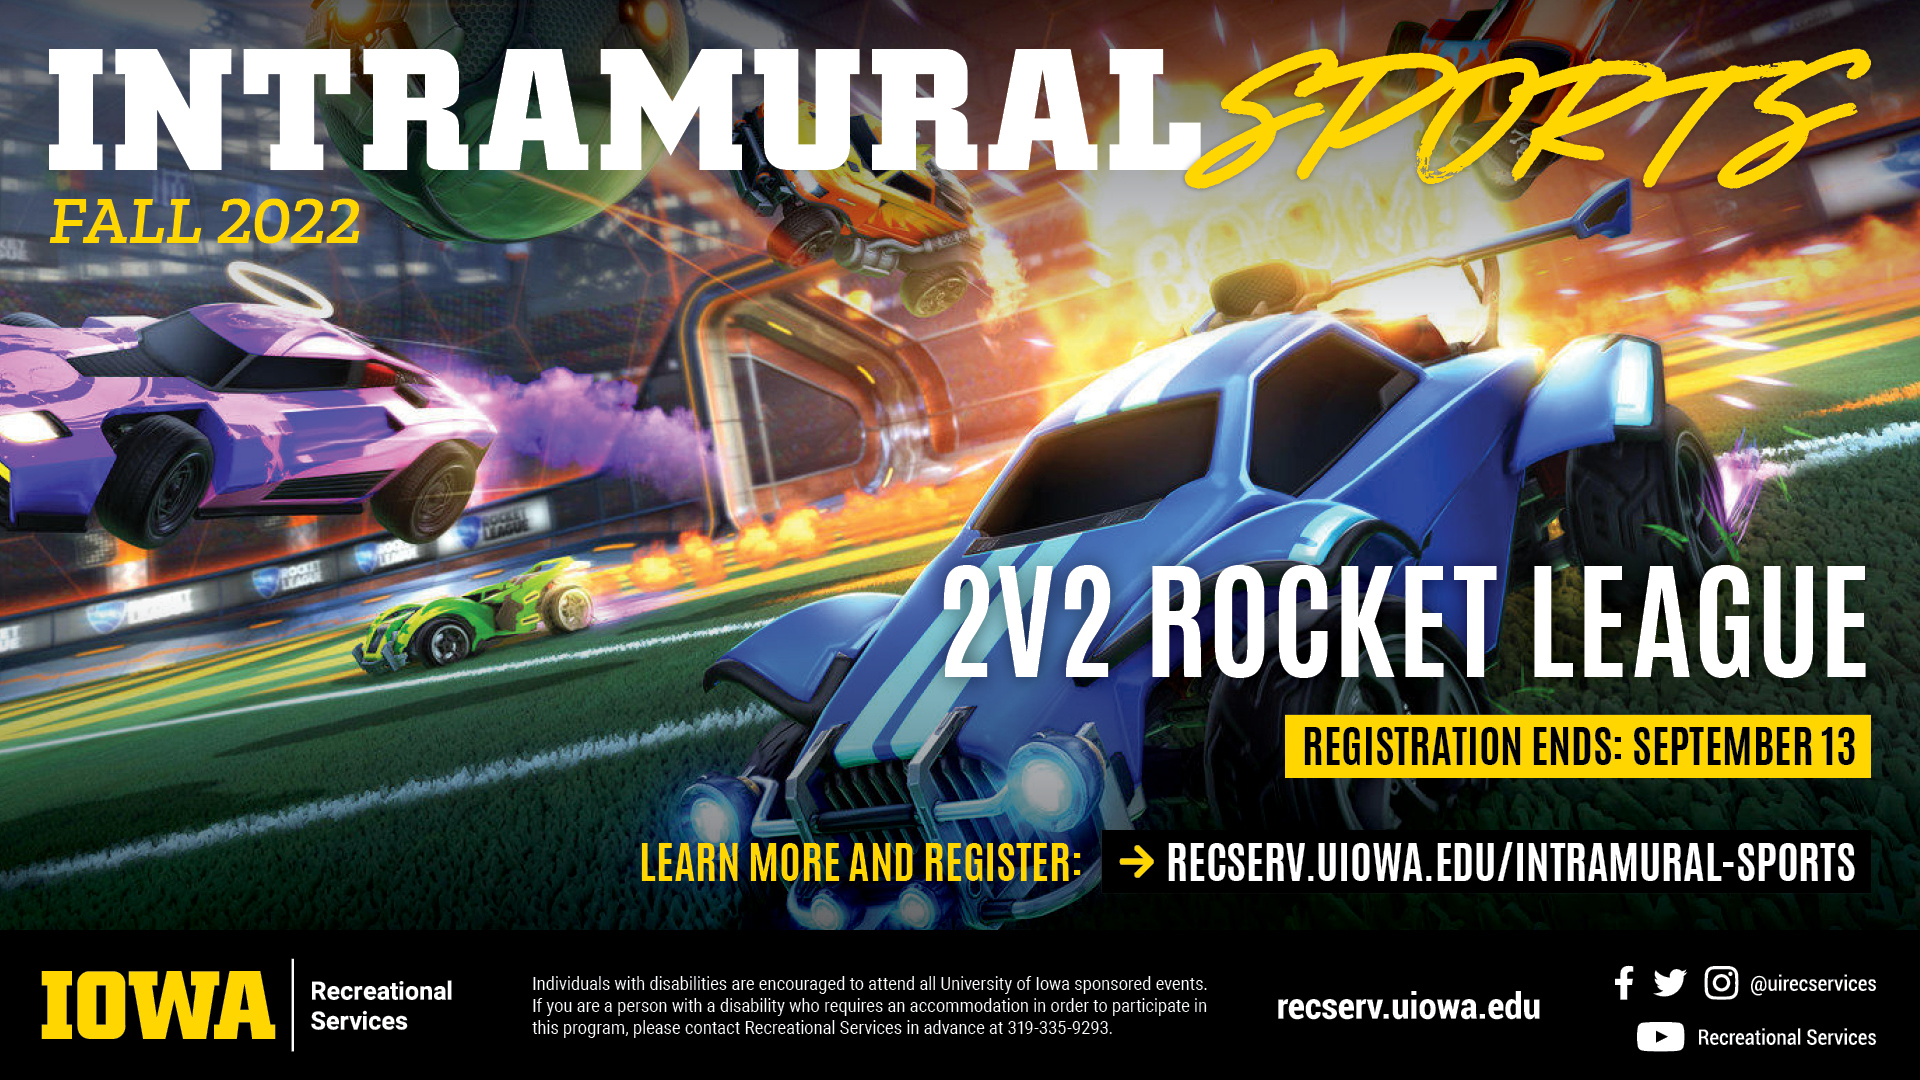 Intramural Sports Fall 2022: 2v2 Rocket League. Learn more and register at reserv.uiowa.edu/intramural-sports